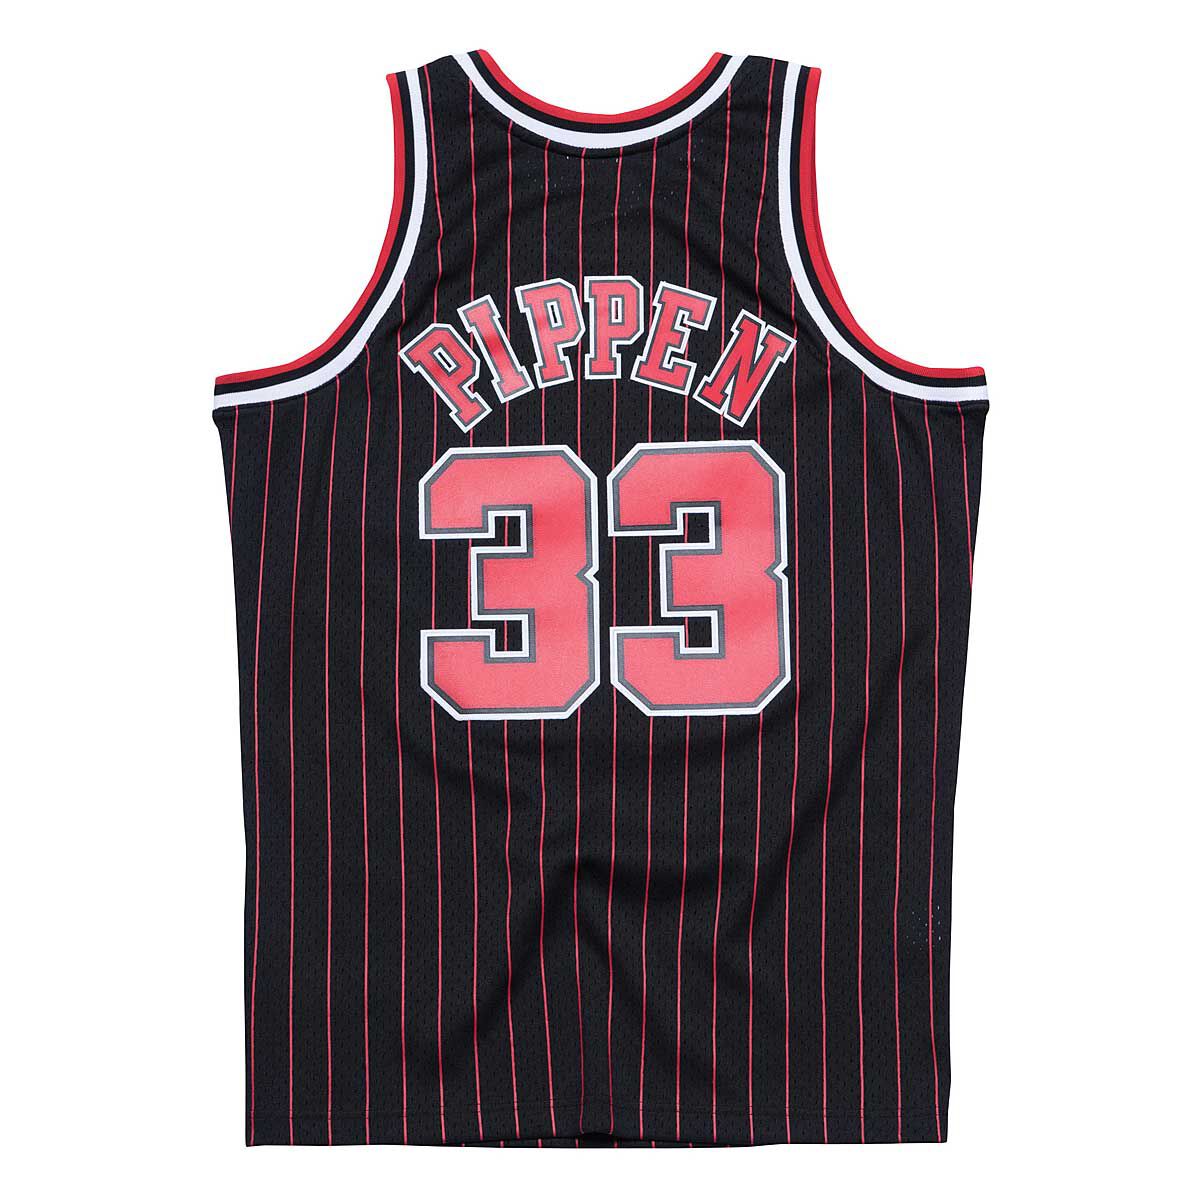 🏀 Get the Scottie Pippen '95 Retro Jersey Black | Cheap Slocog